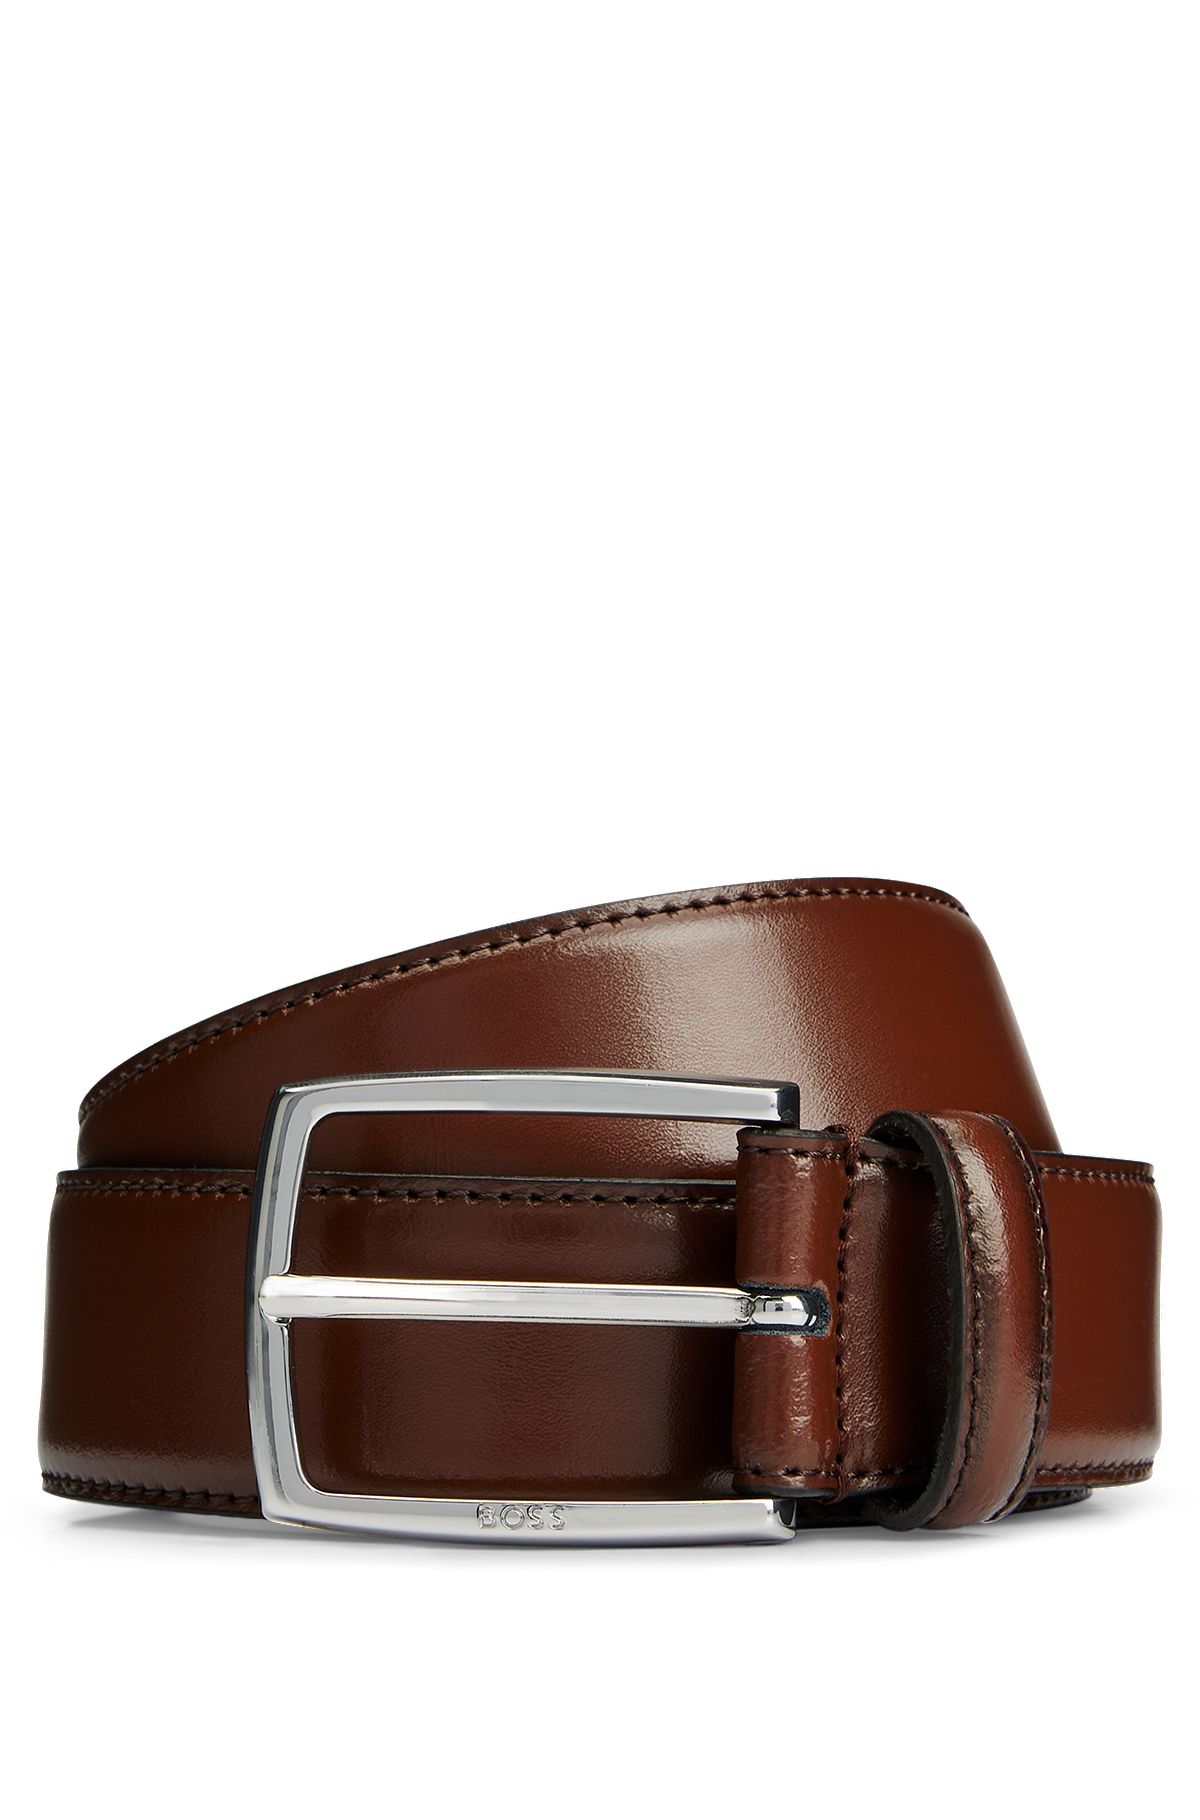 HUGO BOSS Belts – Elaborate designs | Men